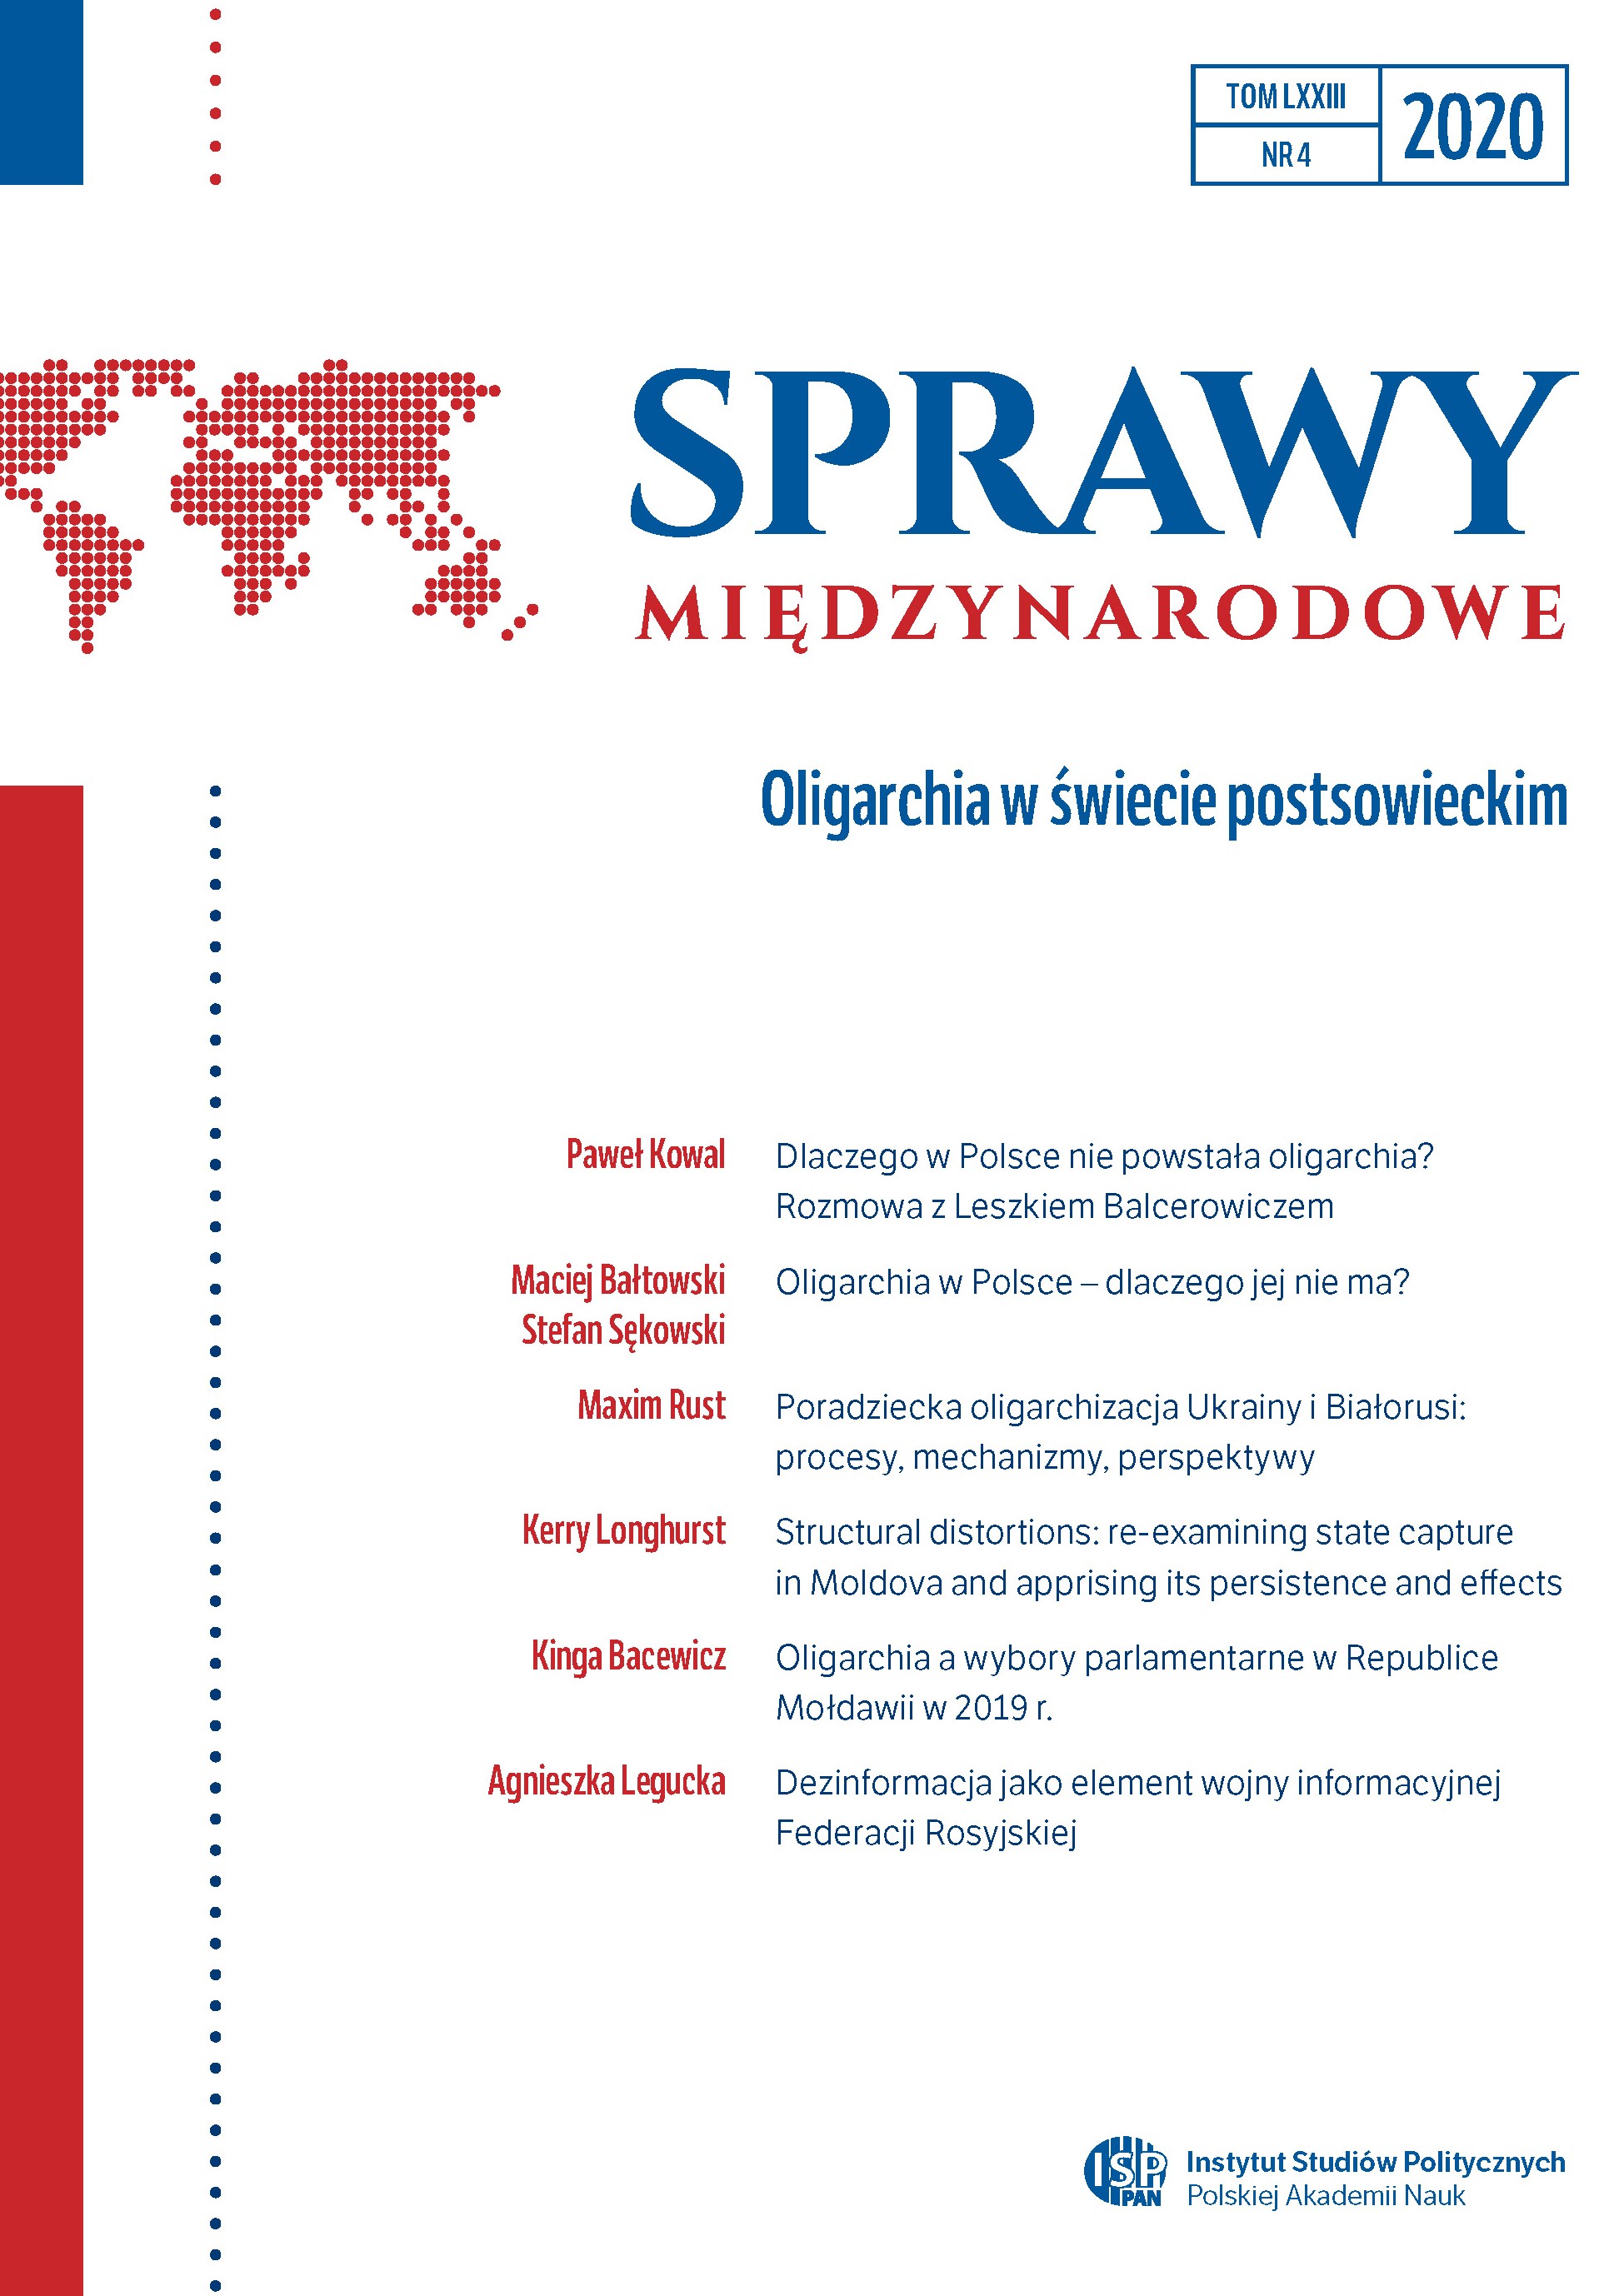 Oligarchia a wybory parlamentarne w Republice Mołdawii w 2019 r.